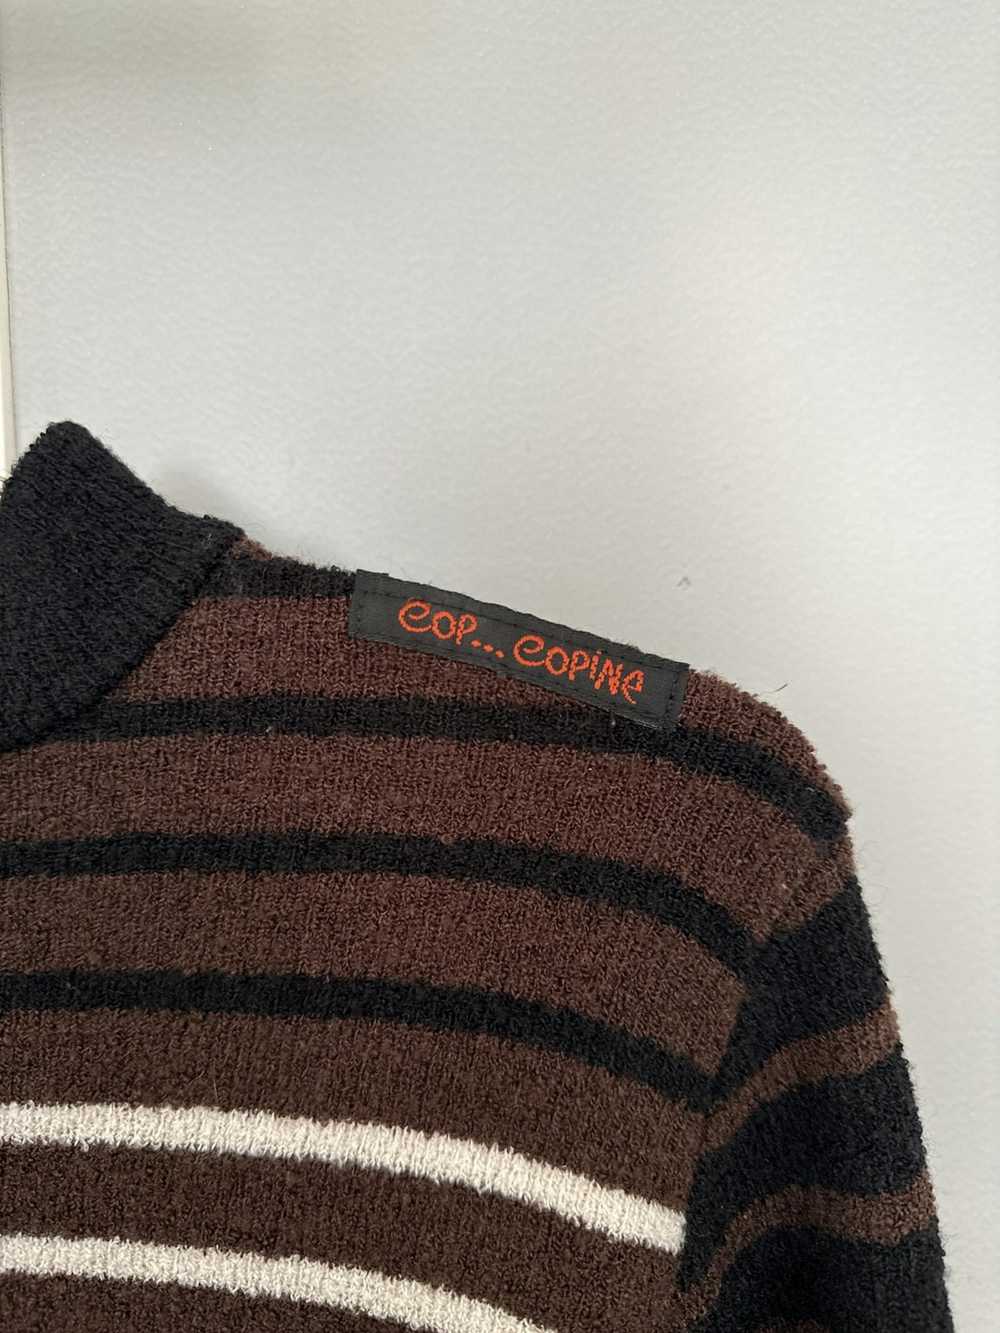 Vintage Y2K Cop Copine Sweater - image 3